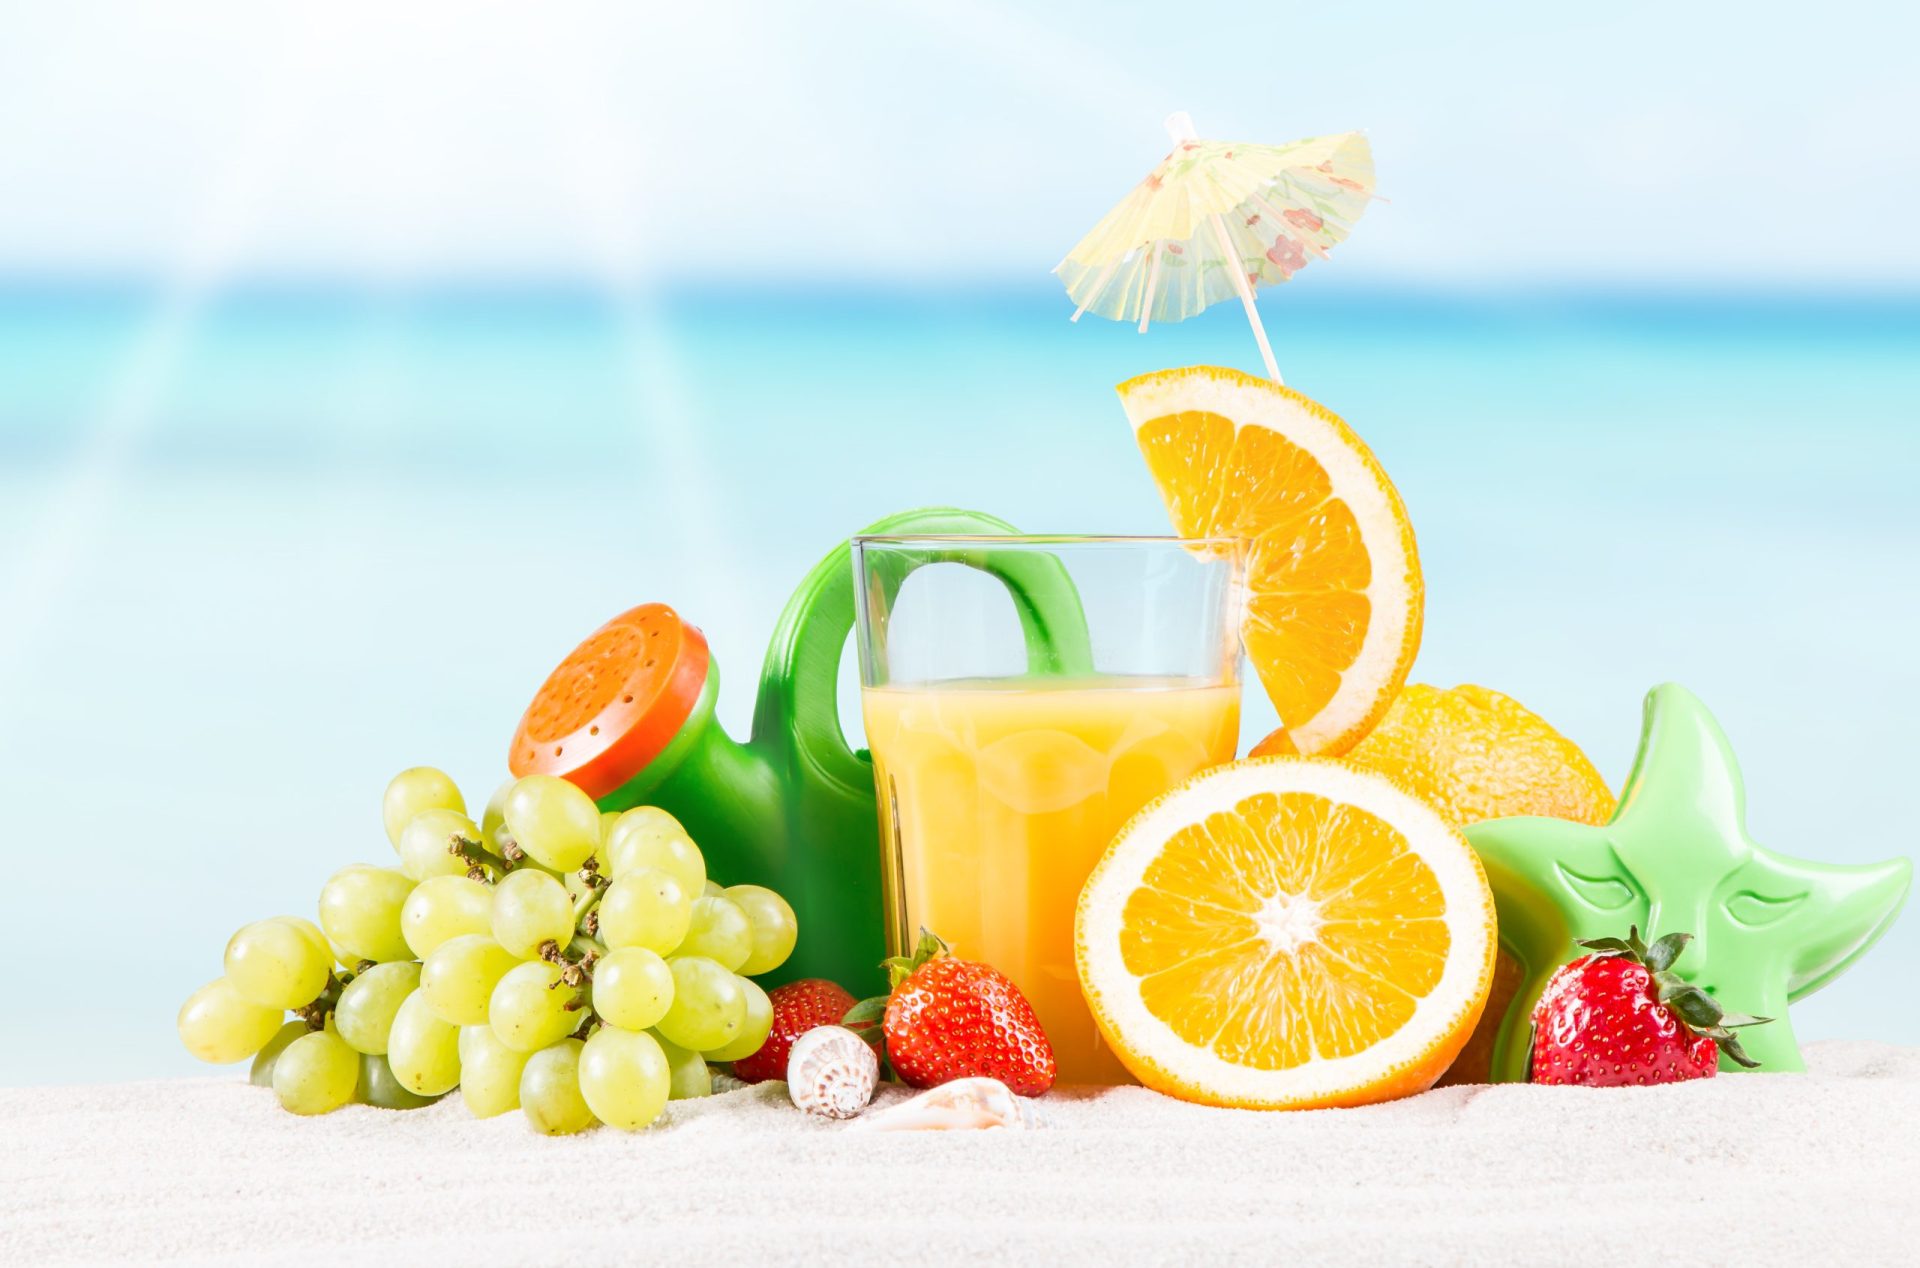 ‘Olha a fruta na praia!’